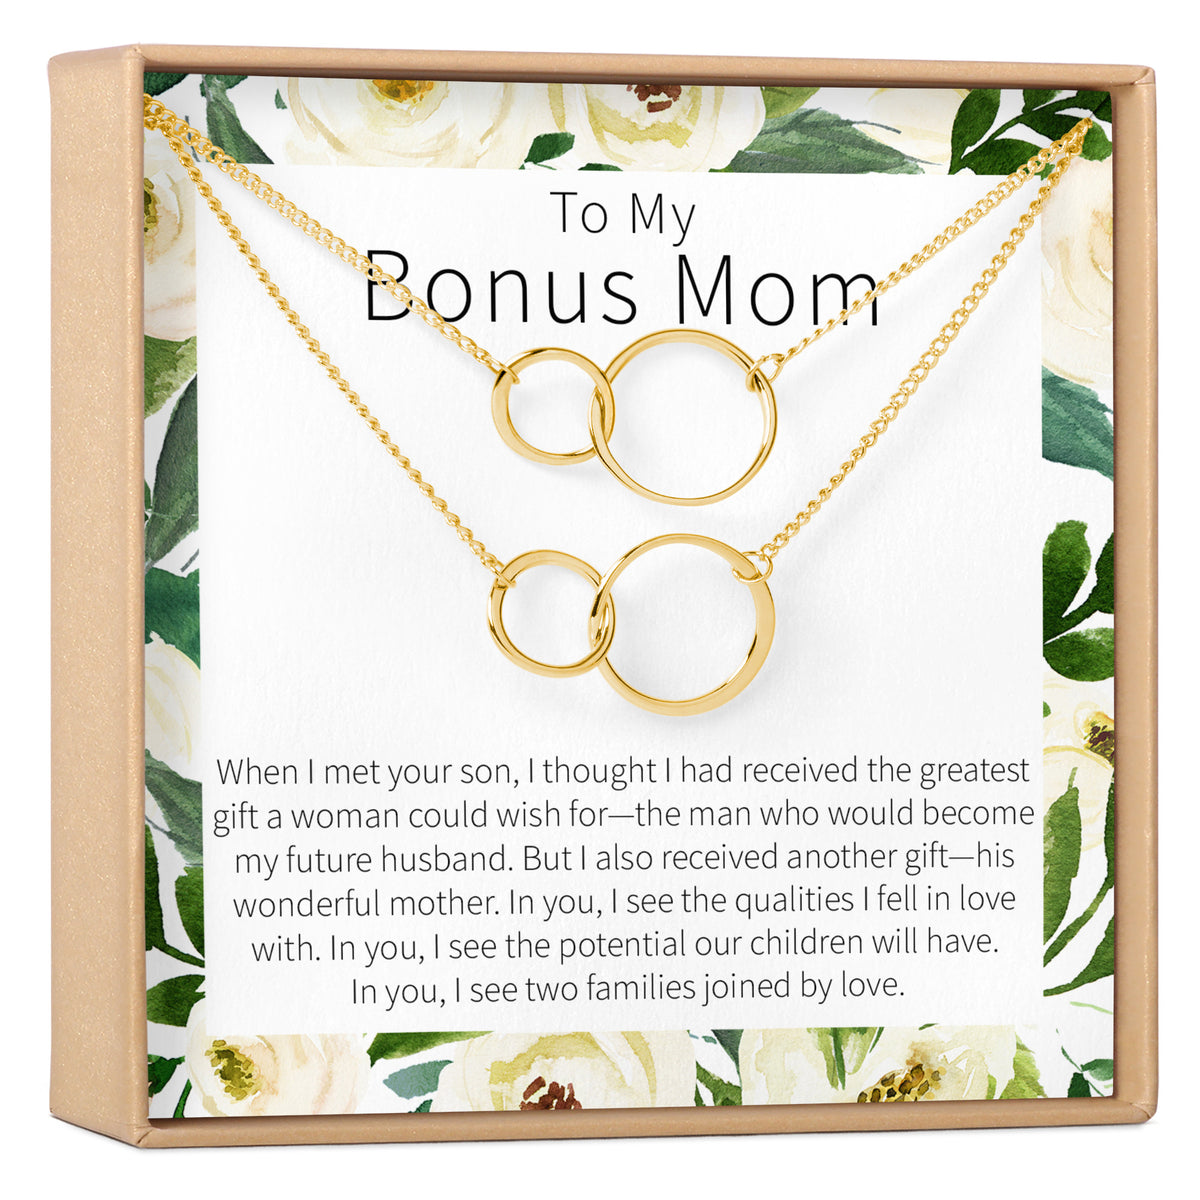 Bonus Mom Double Circles Necklace Set